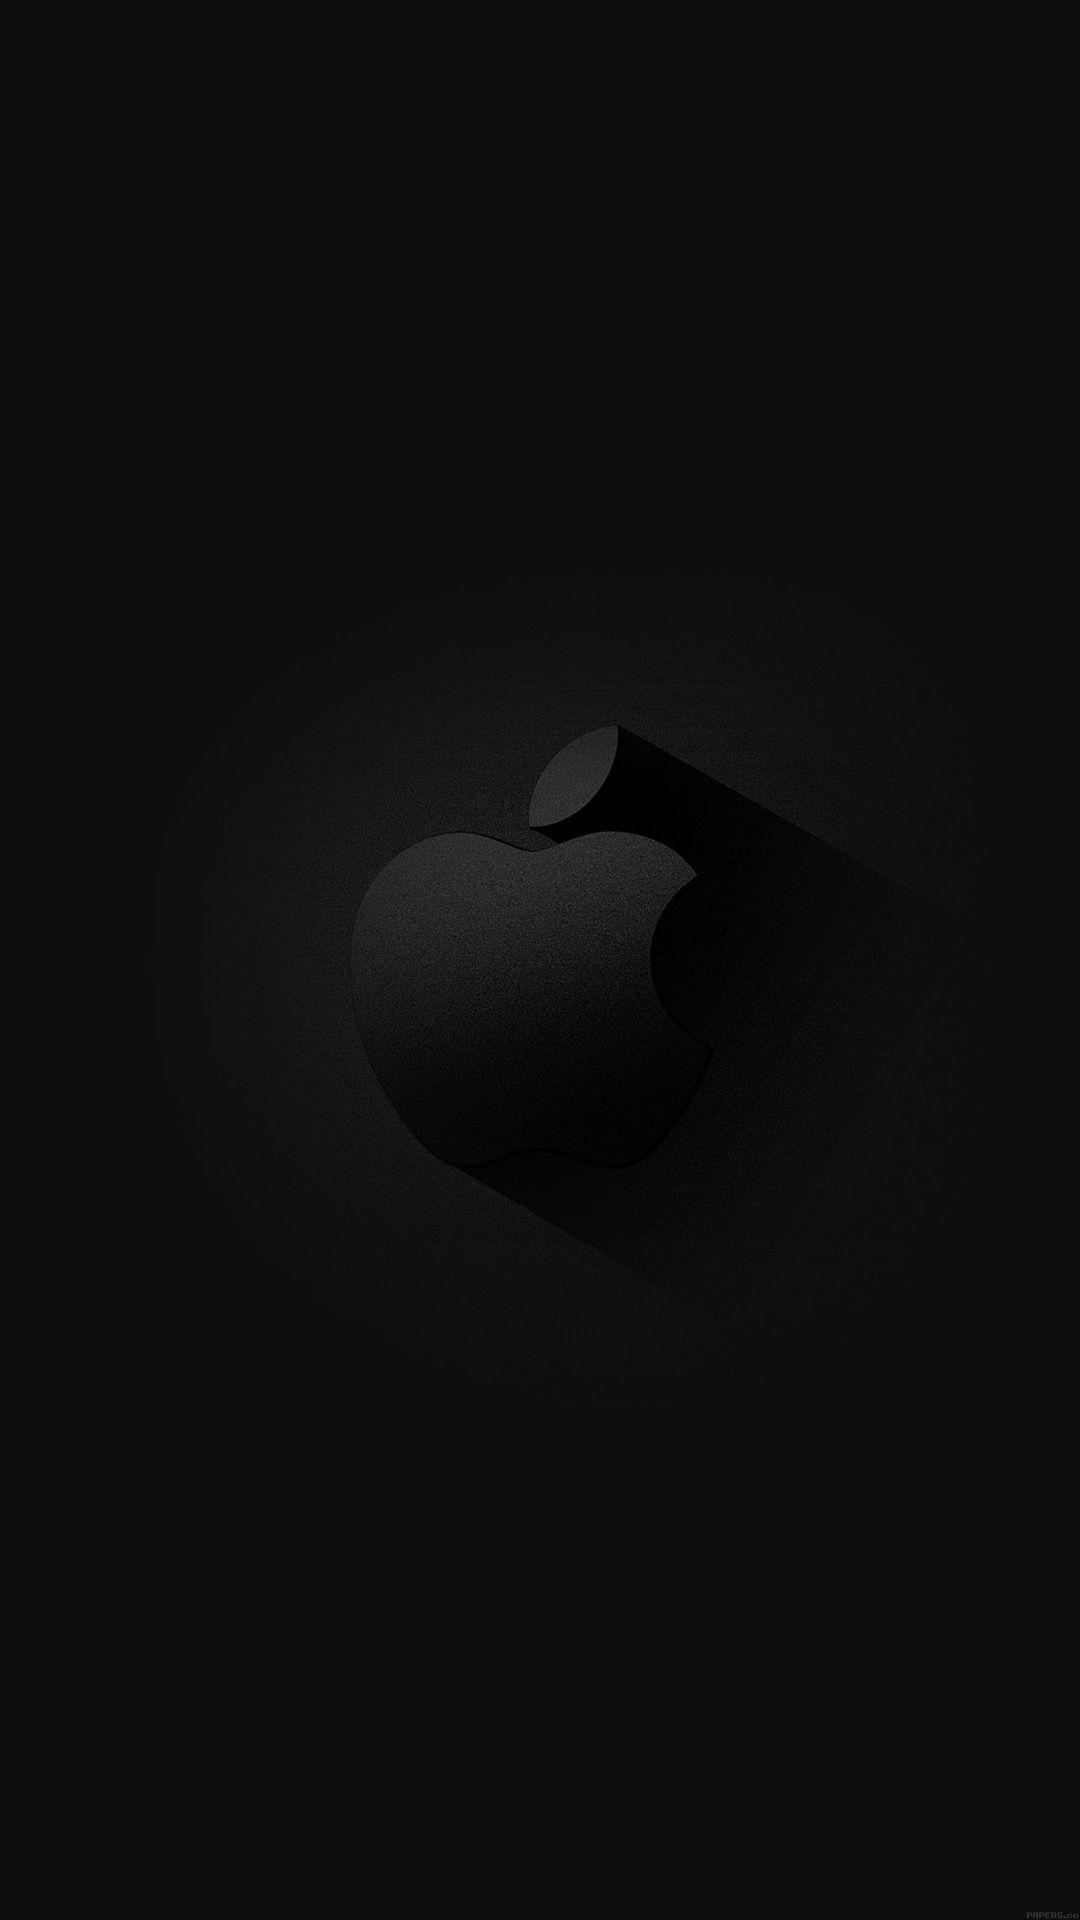 Black Apple iPhone Wallpaper Free Black Apple iPhone